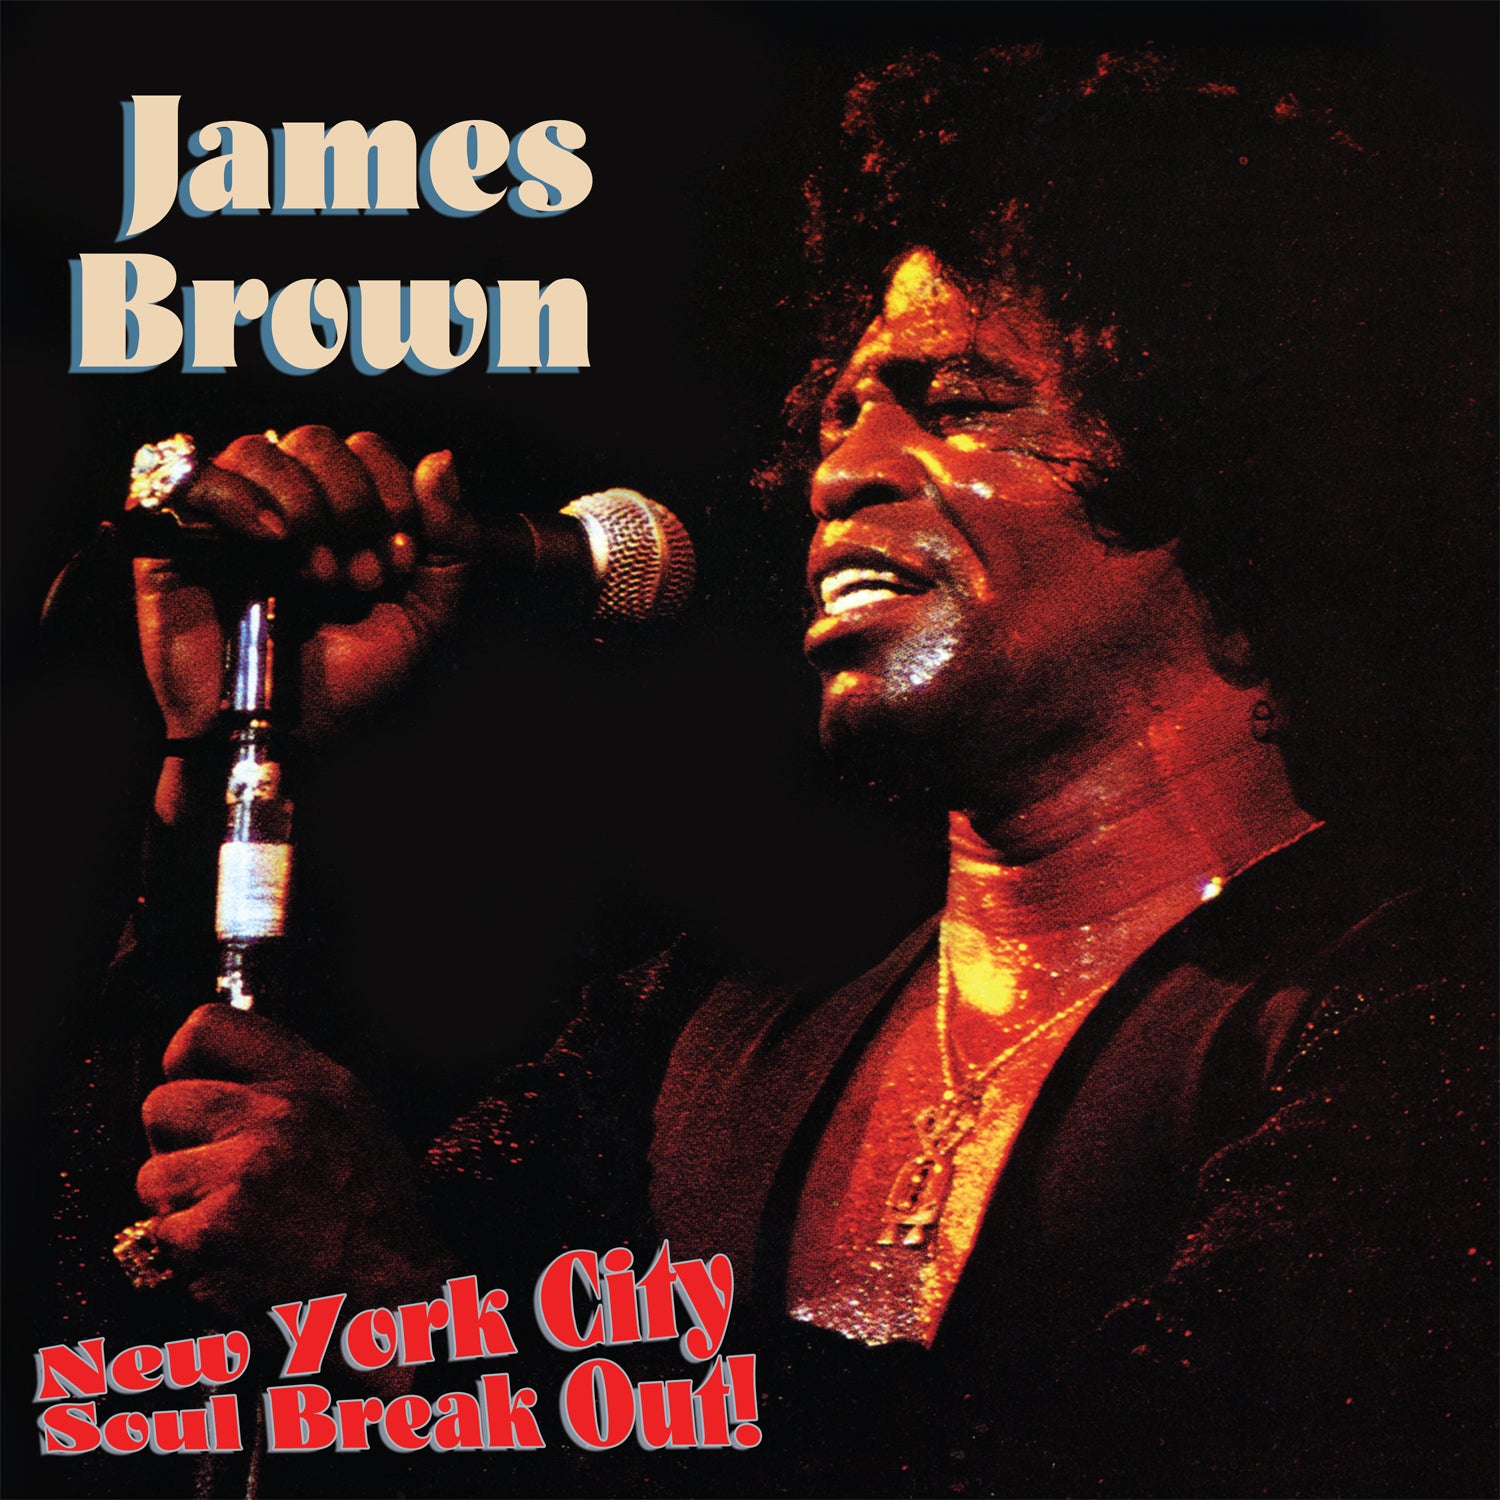 James Brown - New York City Soul Break Out! (LP)